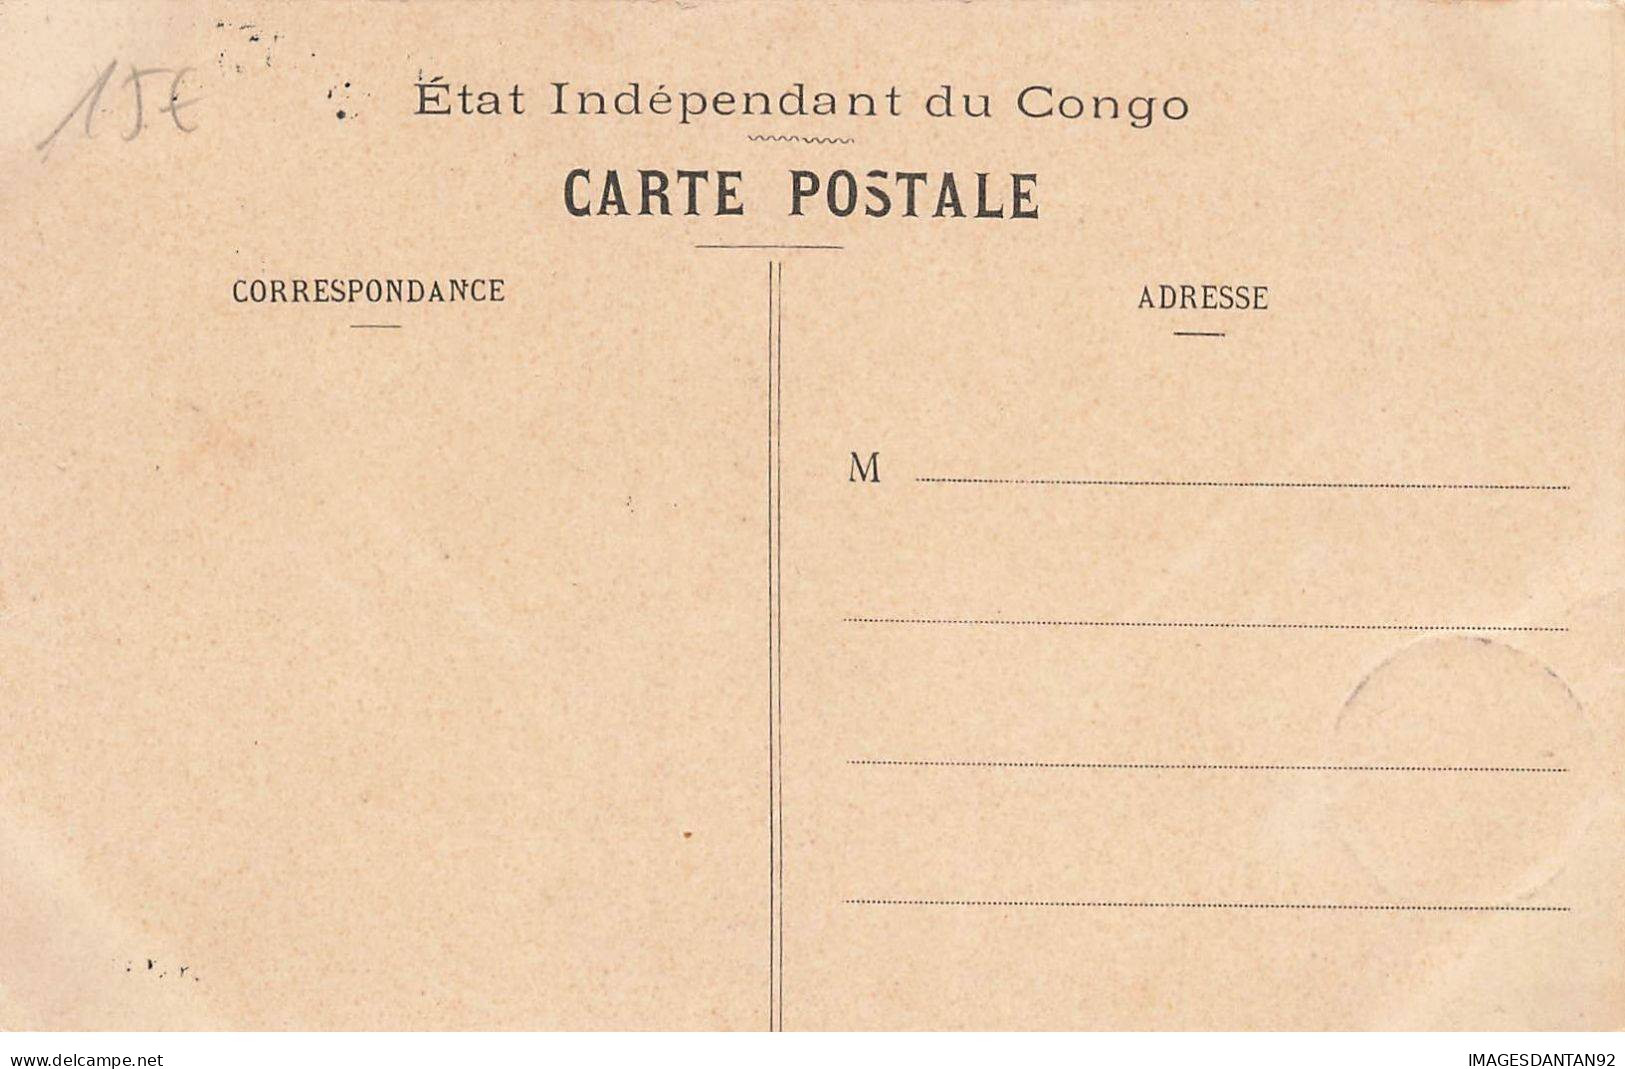 CONGO AL#AL00335 FEMME MAKELE ARUWIMI TYPES COIFFURE - Congo Belge